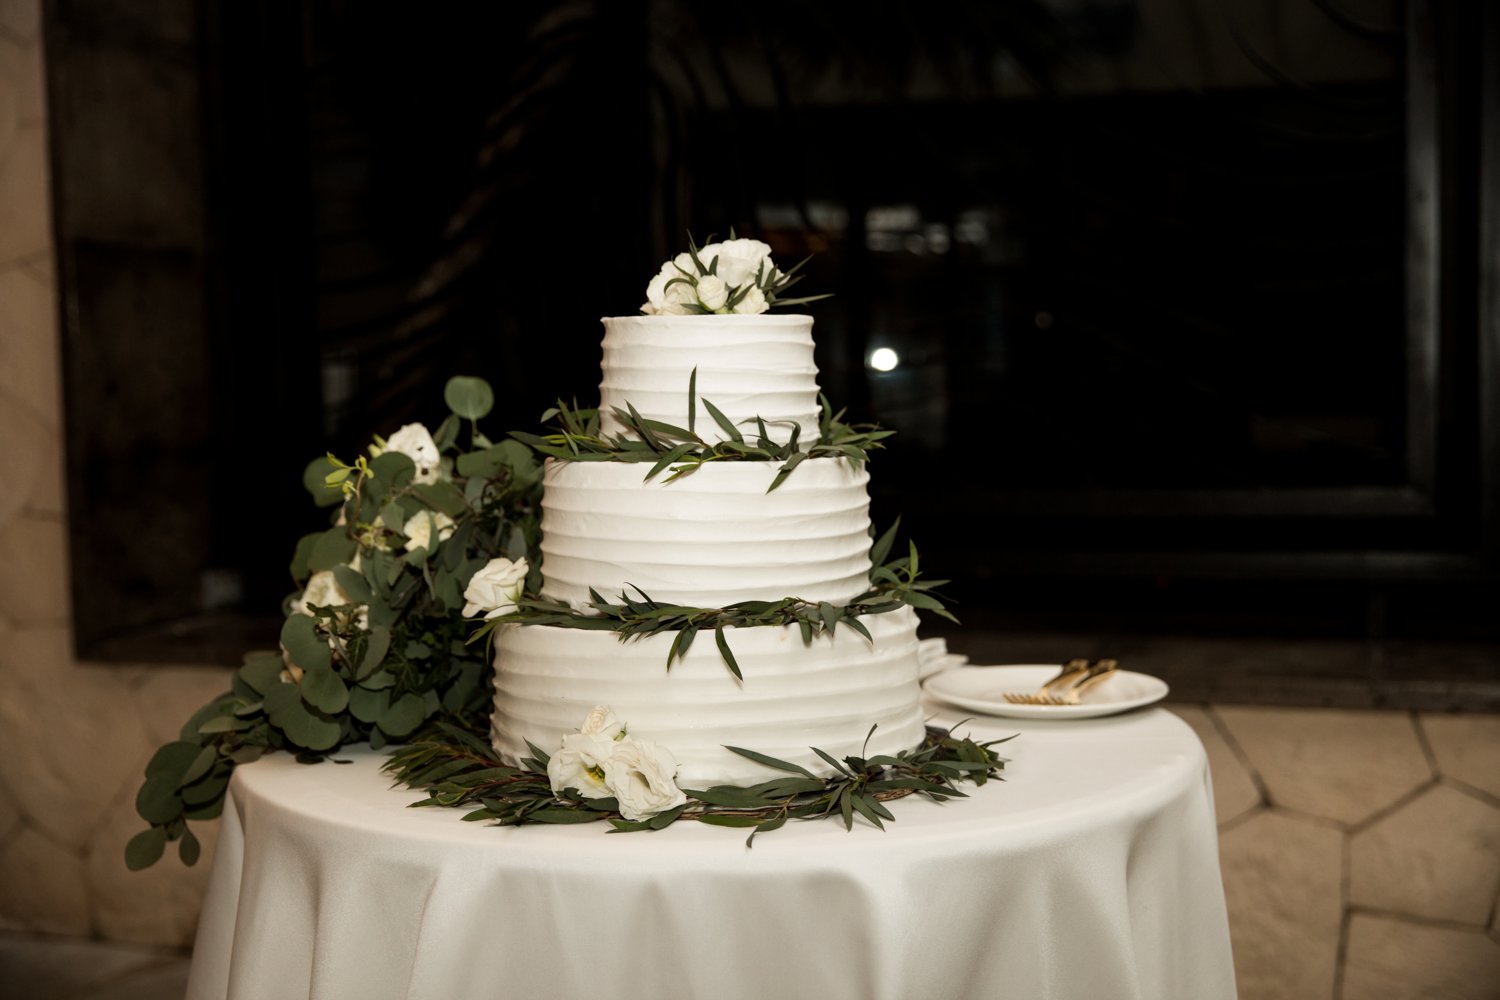  images by feliciathephotographer.com | destination wedding photographer | mexico | tropical | fiji | venue | azul beach resort | riviera maya | reception | details | cake | green and white florals | gold forks | 